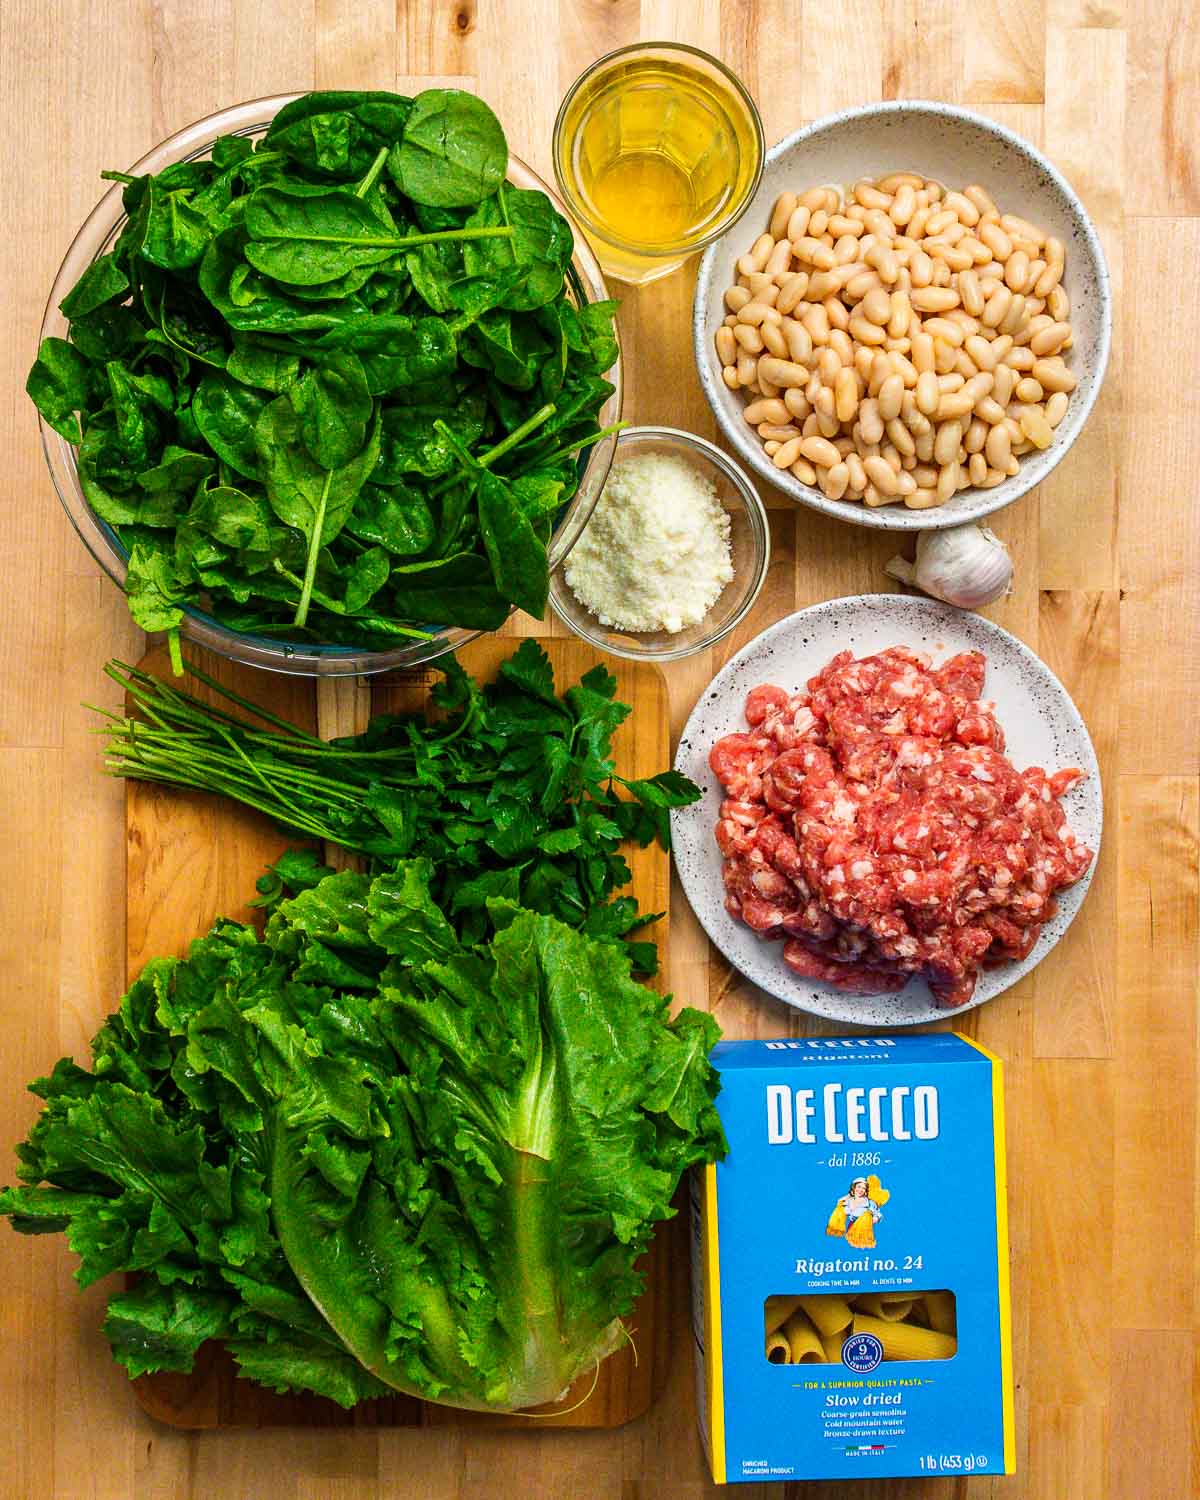 Ingredients shown: spinach, white wine, Pecorino, beans, garlic, sausage, parsley, escarole, and pasta.